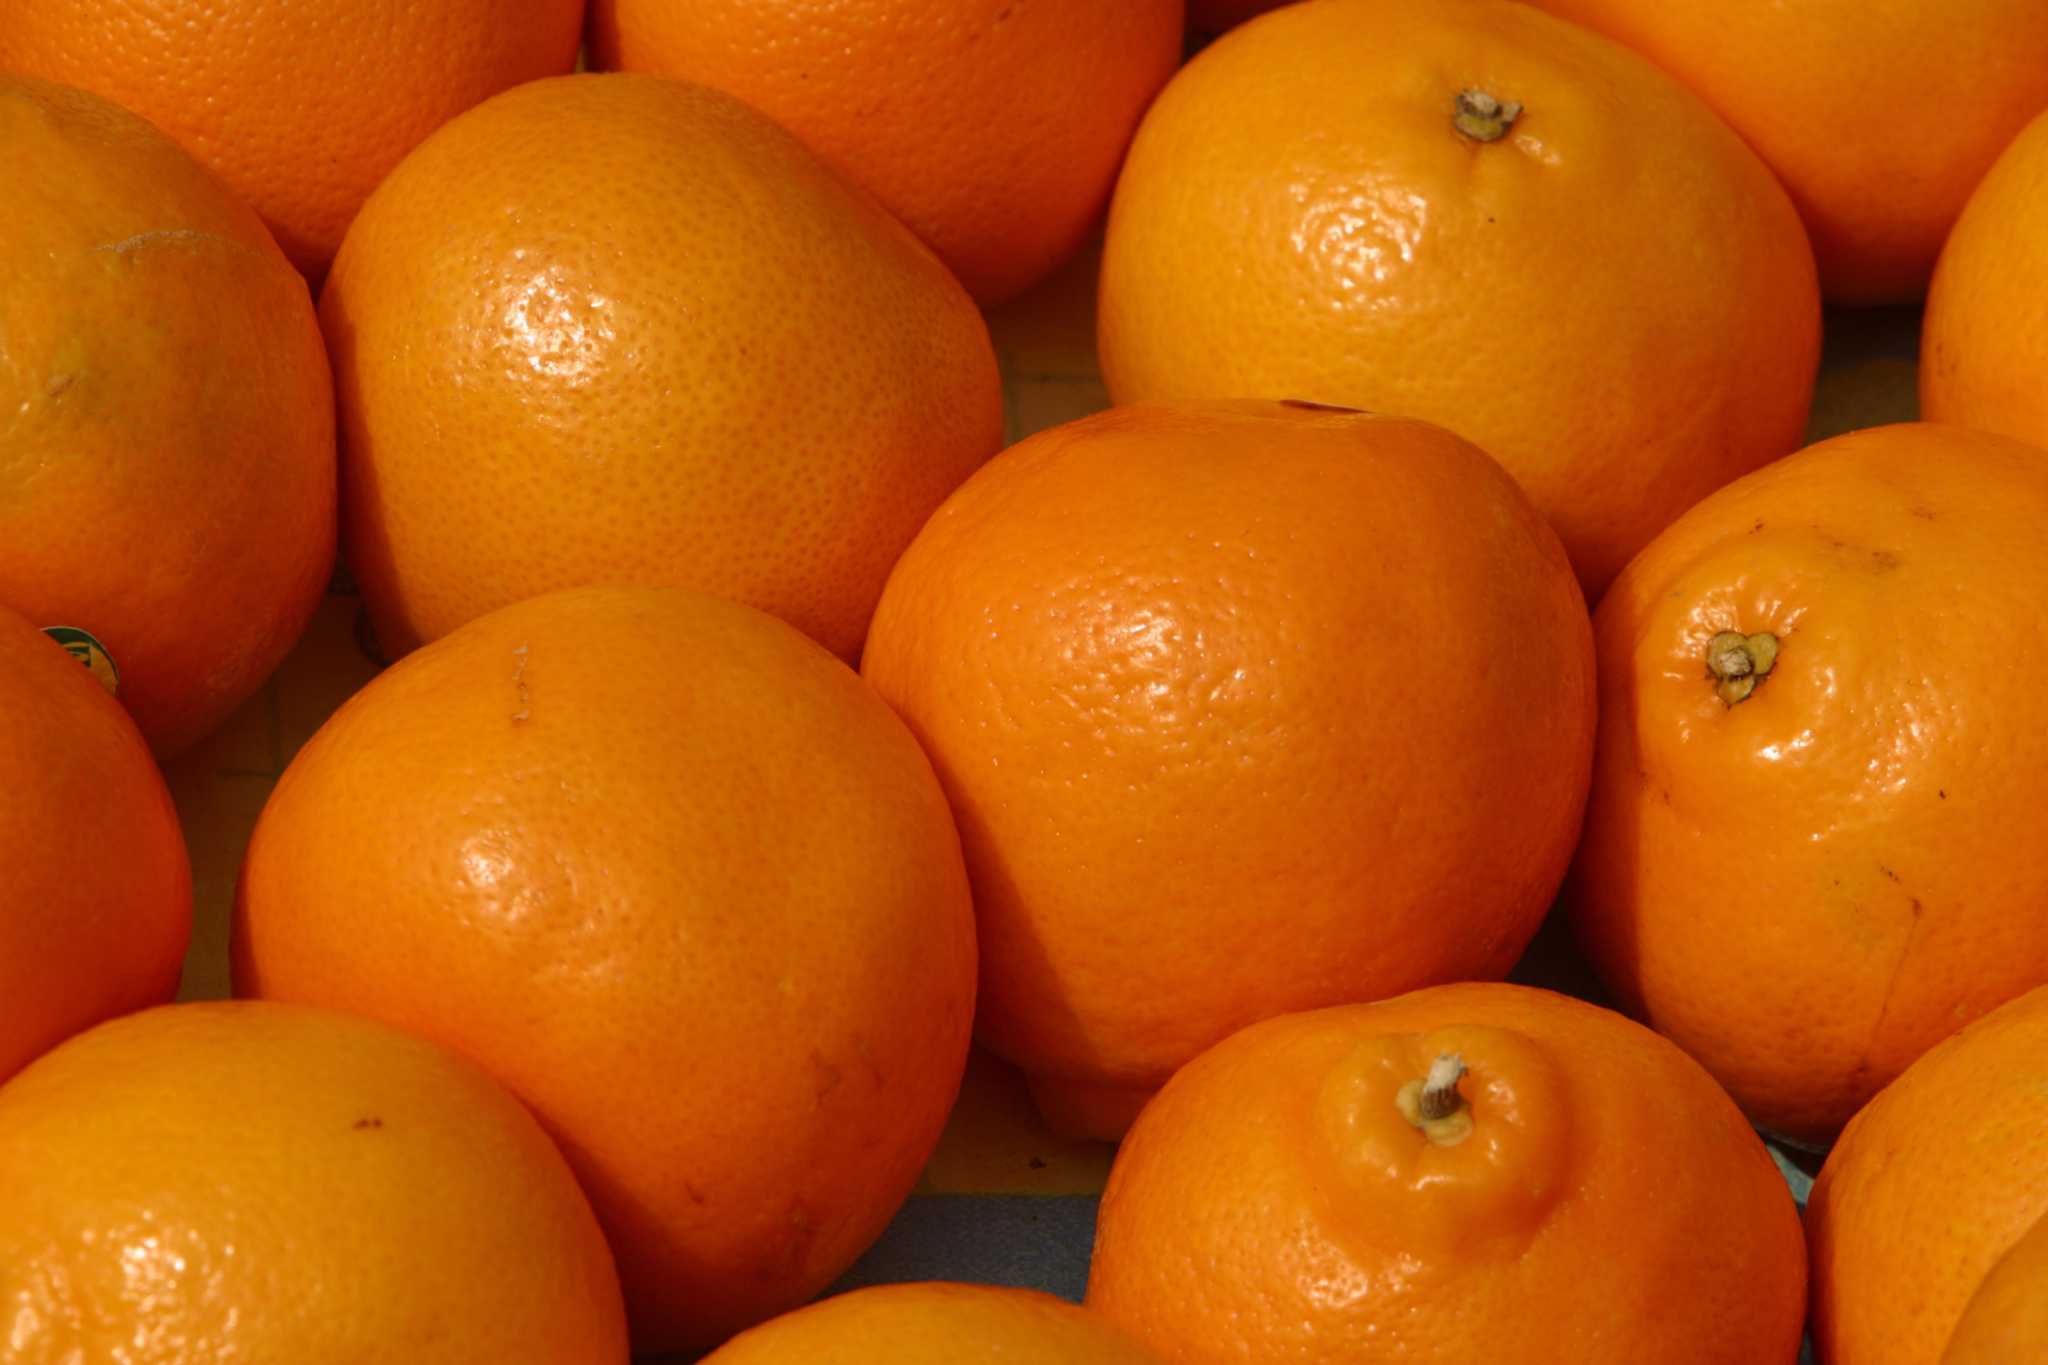 Tangerines vs. Clementines